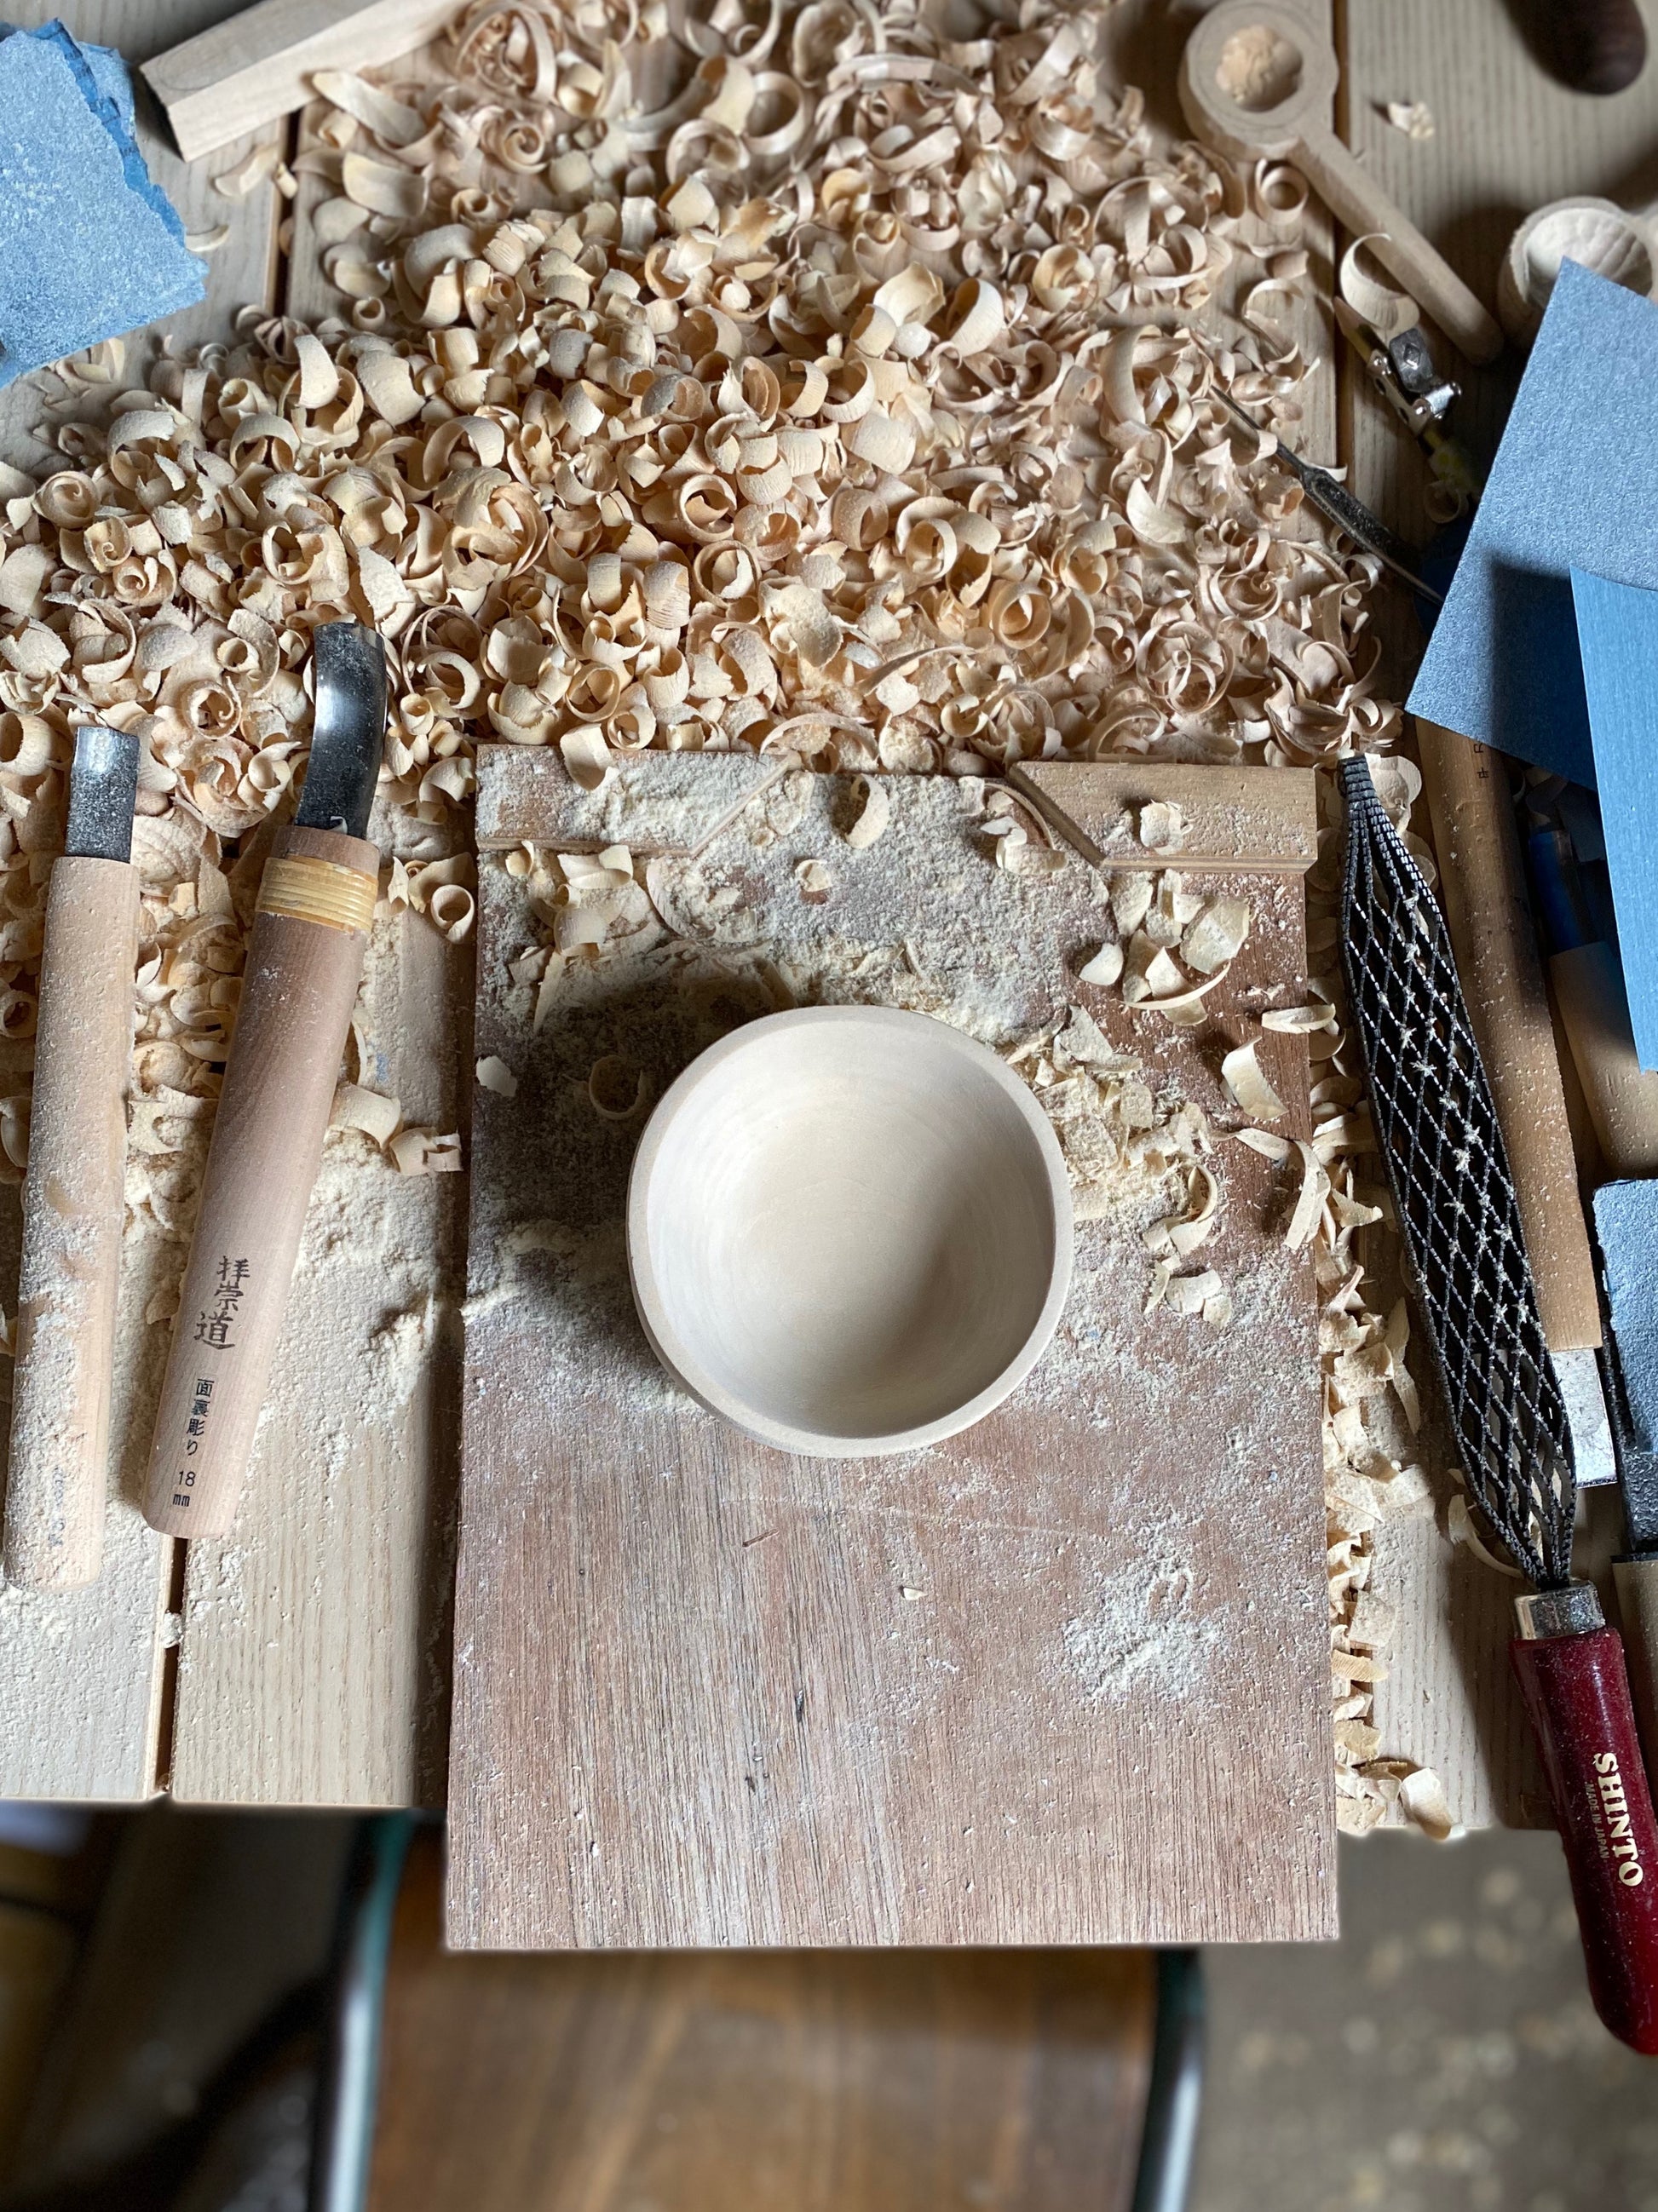 Japanese Bowl Carving Kit